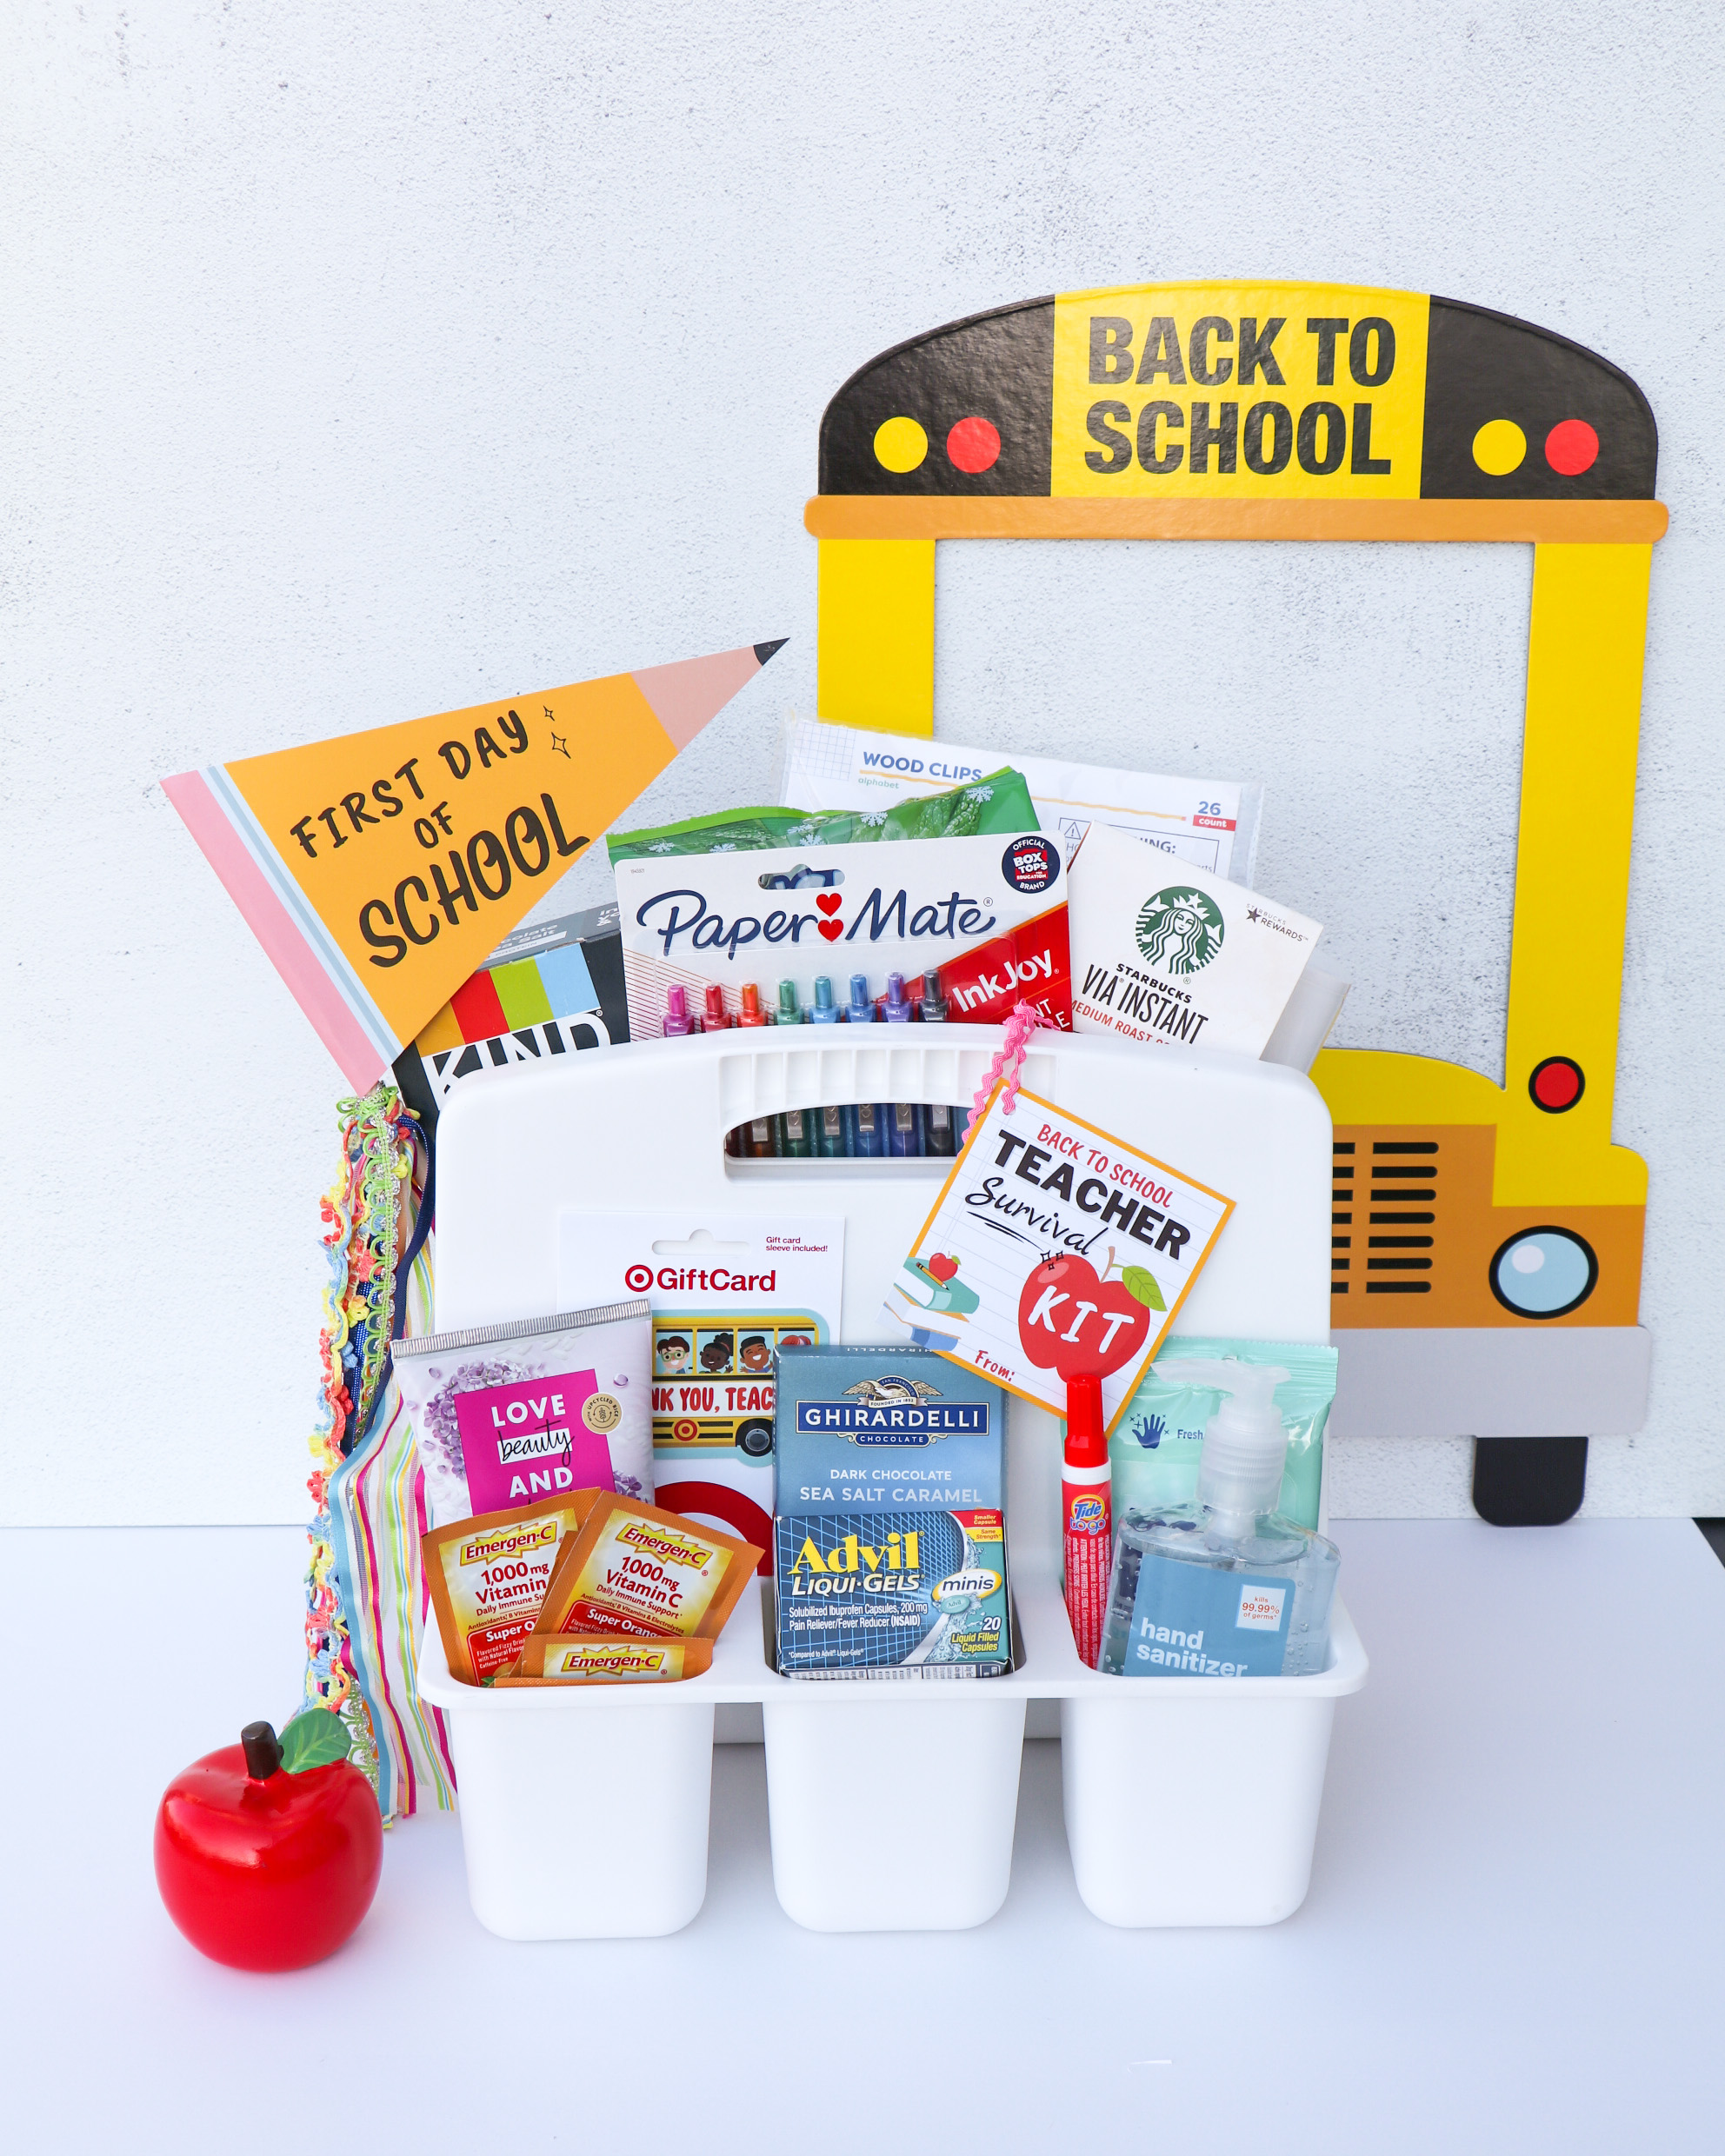 Teacher Survival Kit Gift Idea, Appreciation Week